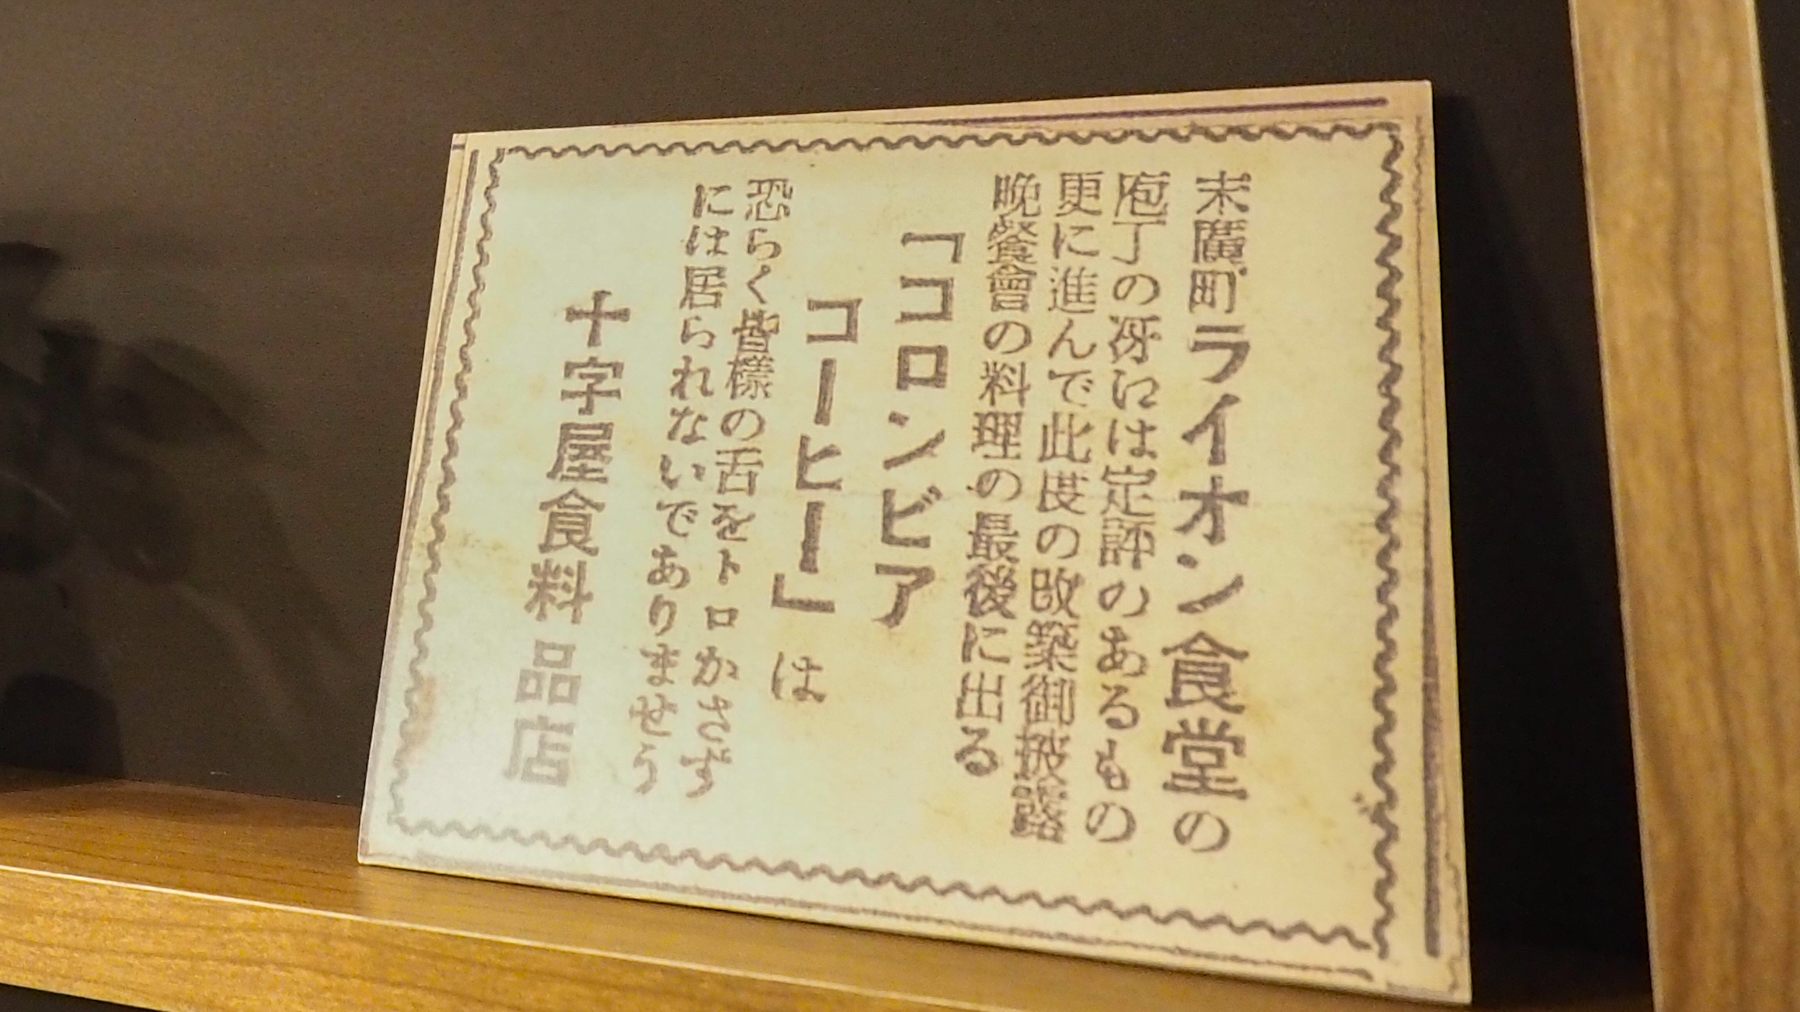 Advertisement of JUJIYA GROCERY from the early Showa period, at JUJIYA COFFEE in Sapporo